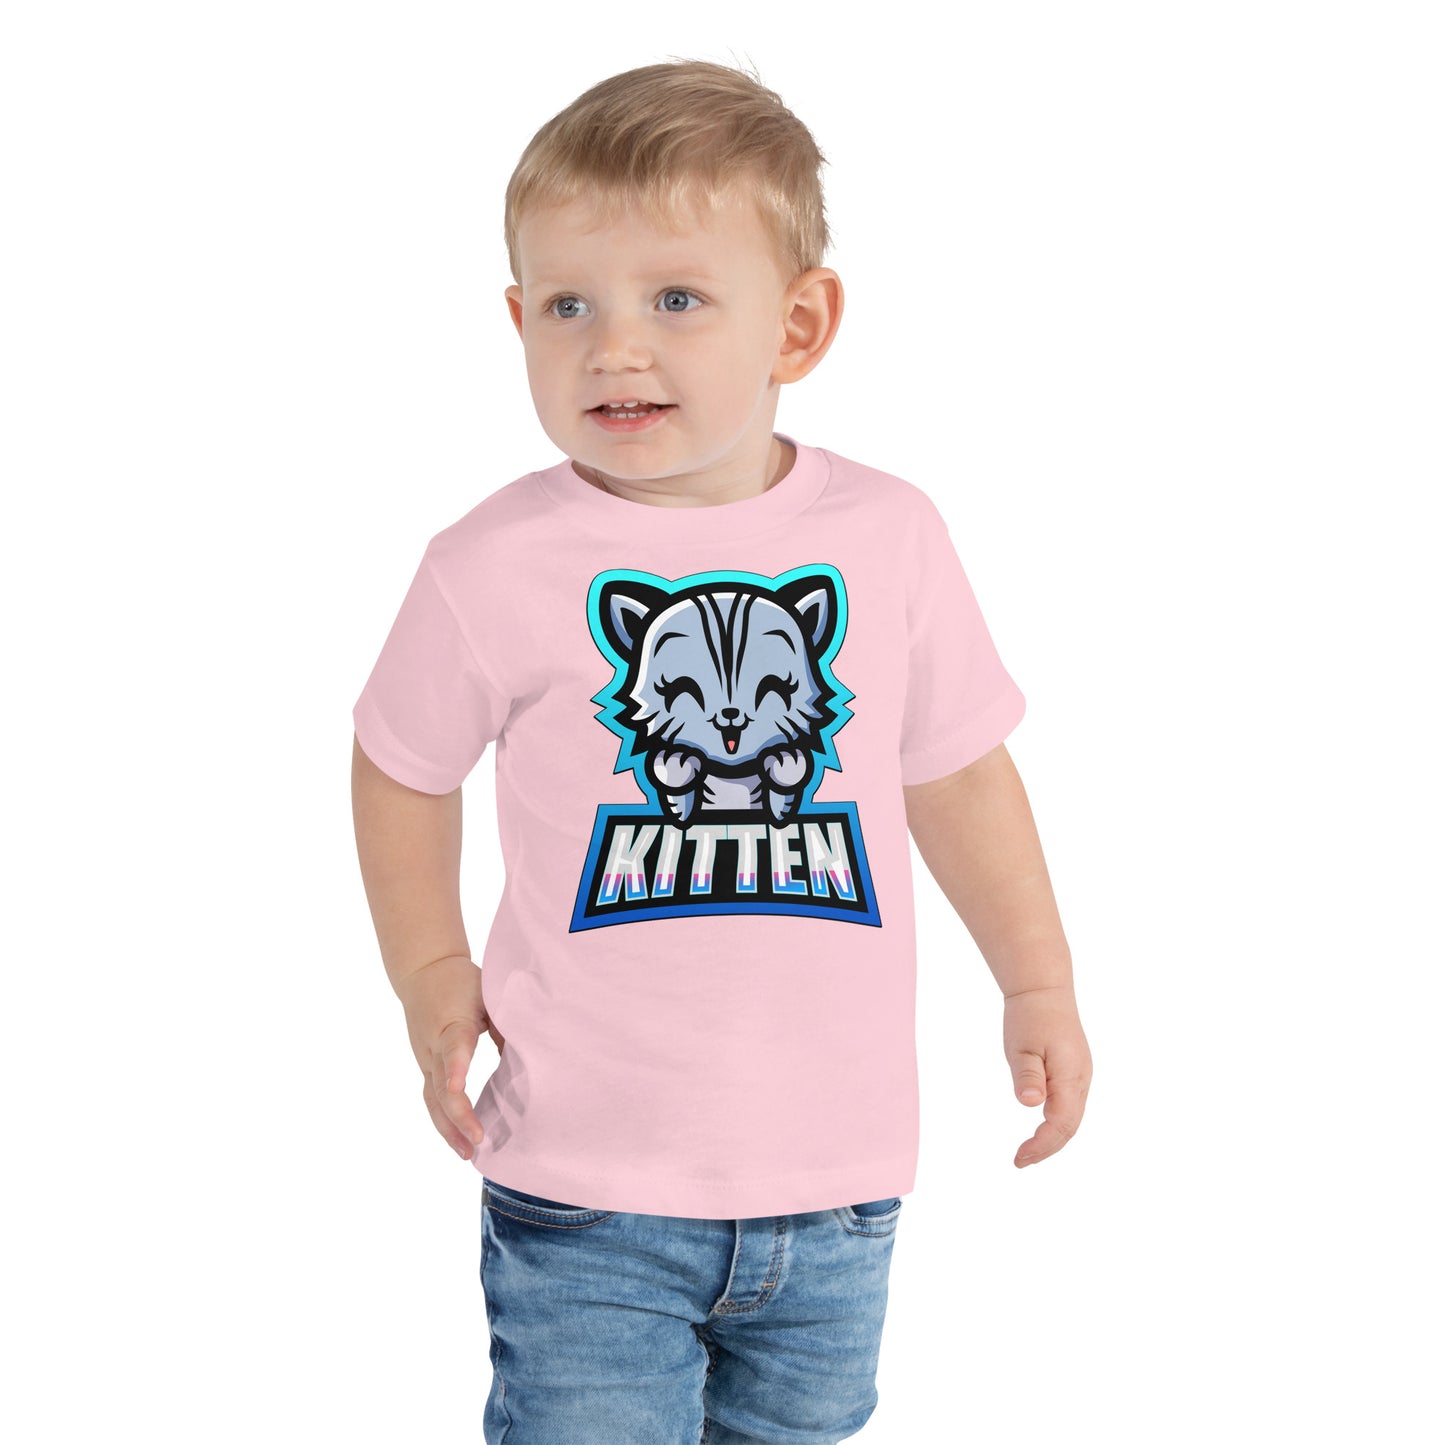 Cute Kitty Cat T-shirt, No. 0212